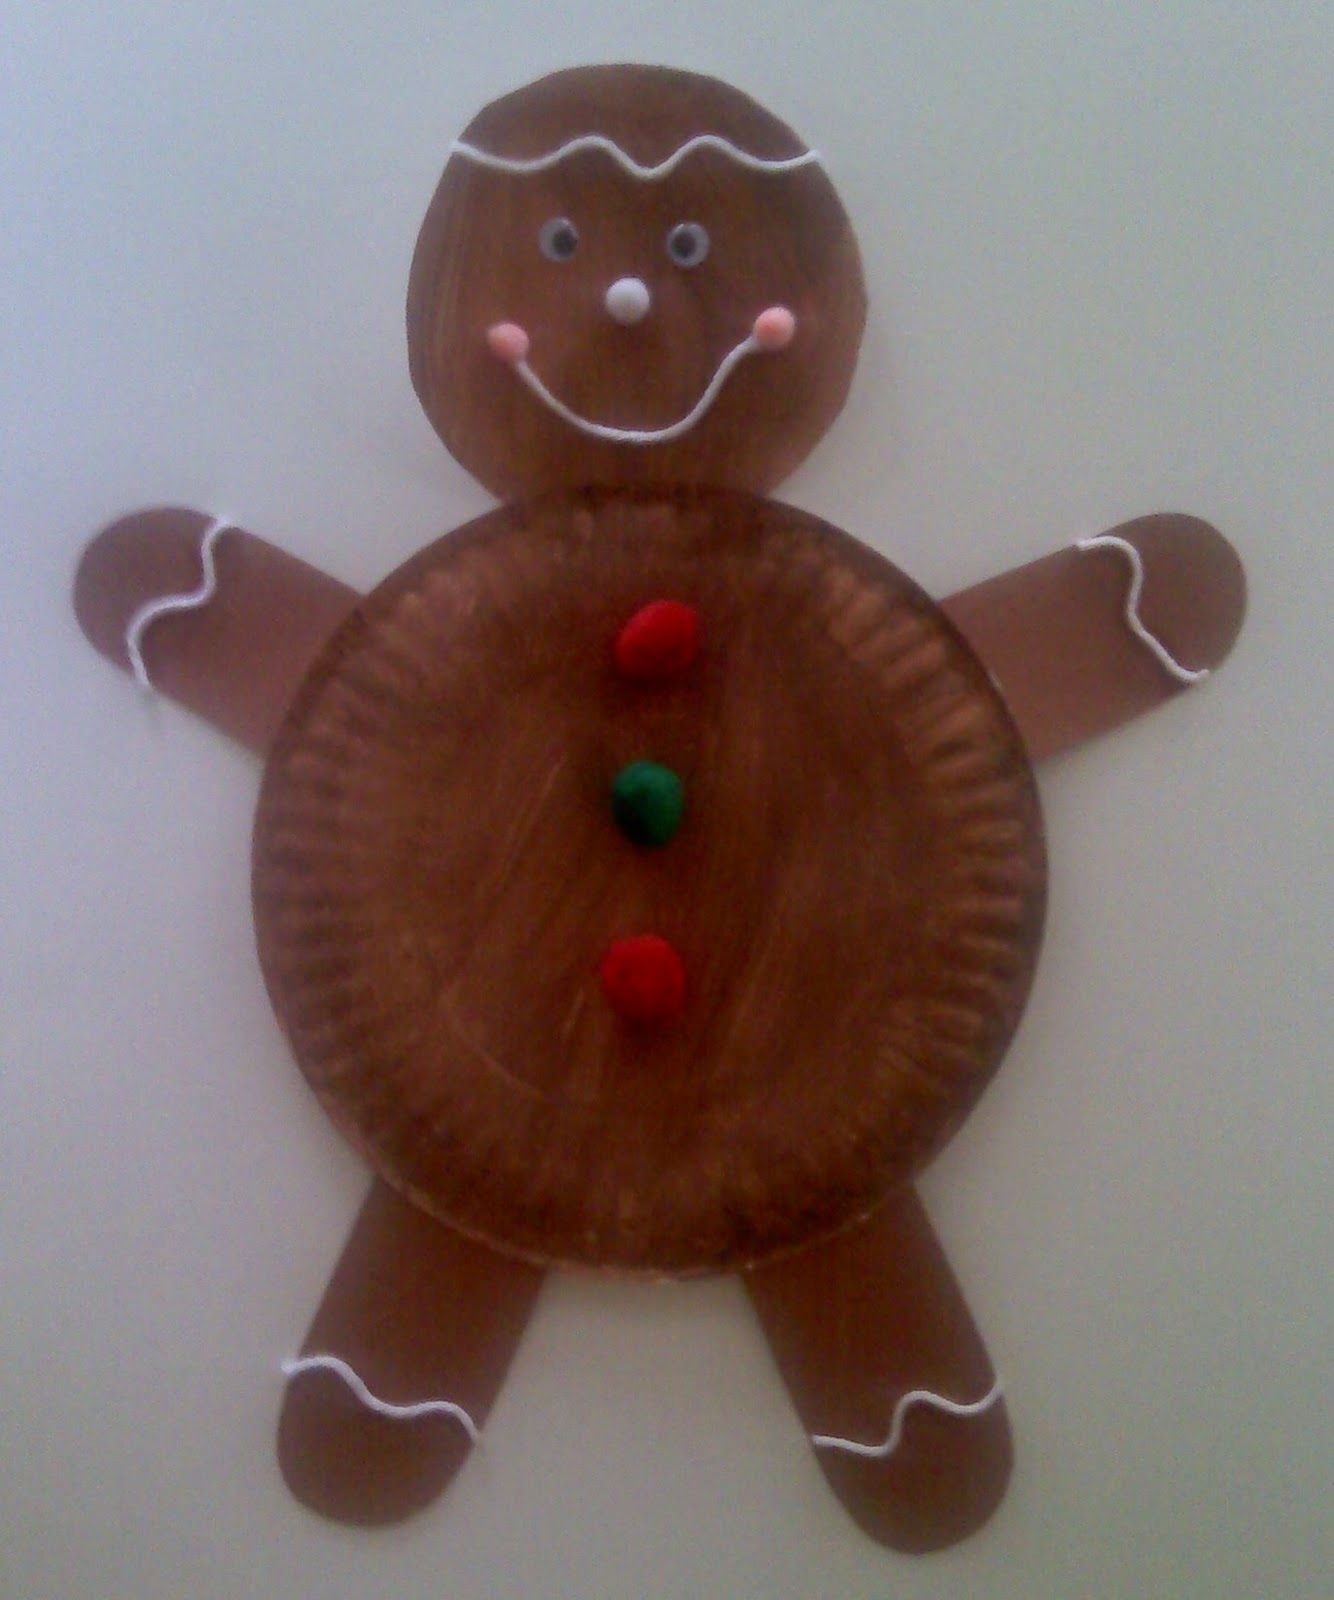 Crafts For Preschoolers: Paper Plate Gingerbread Man